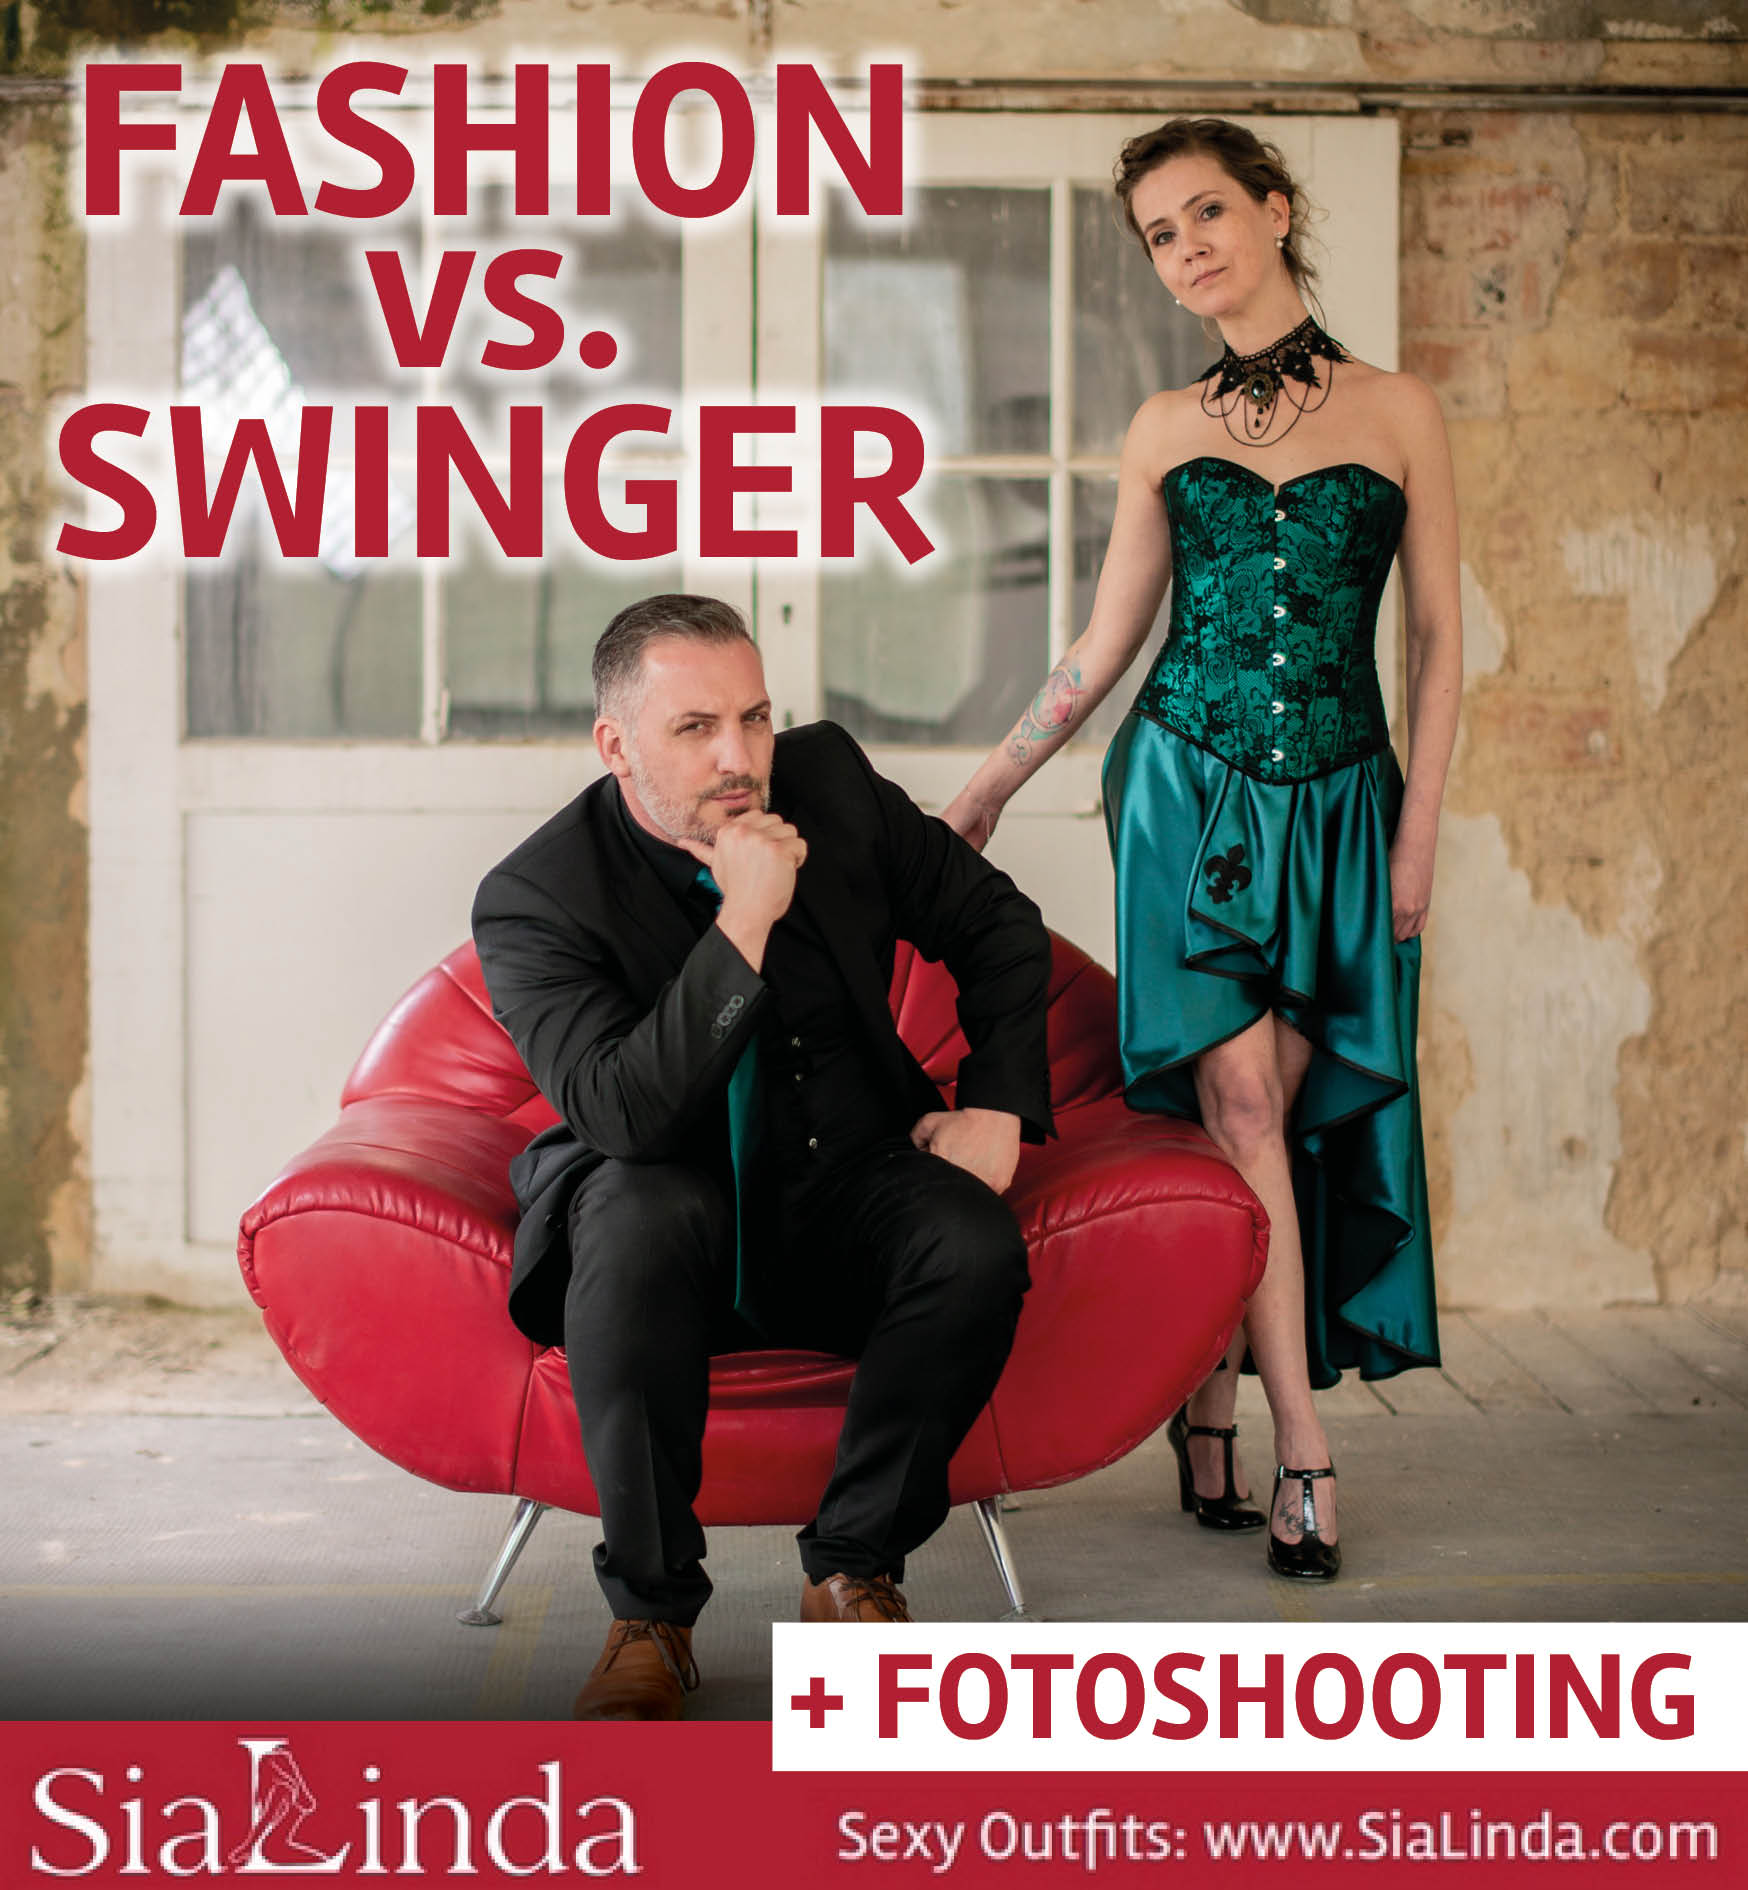 SiaLinda Fashion vs Swinger +Fotoshooting